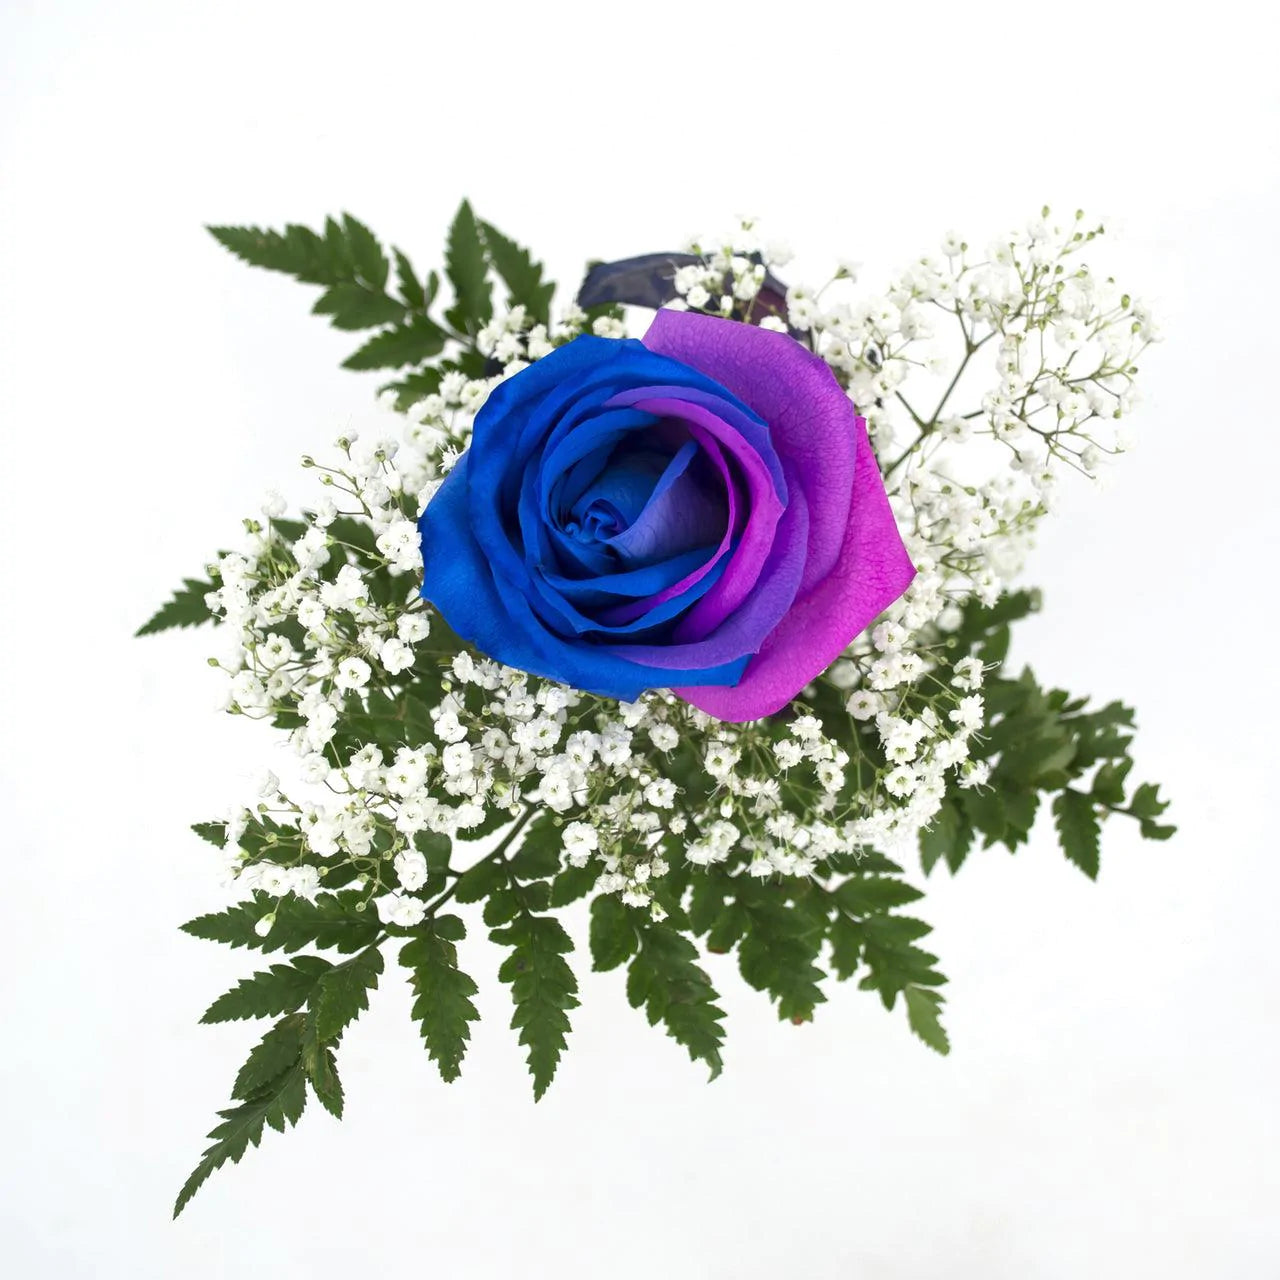 Pink and blue rose bouquet - 60 bqts